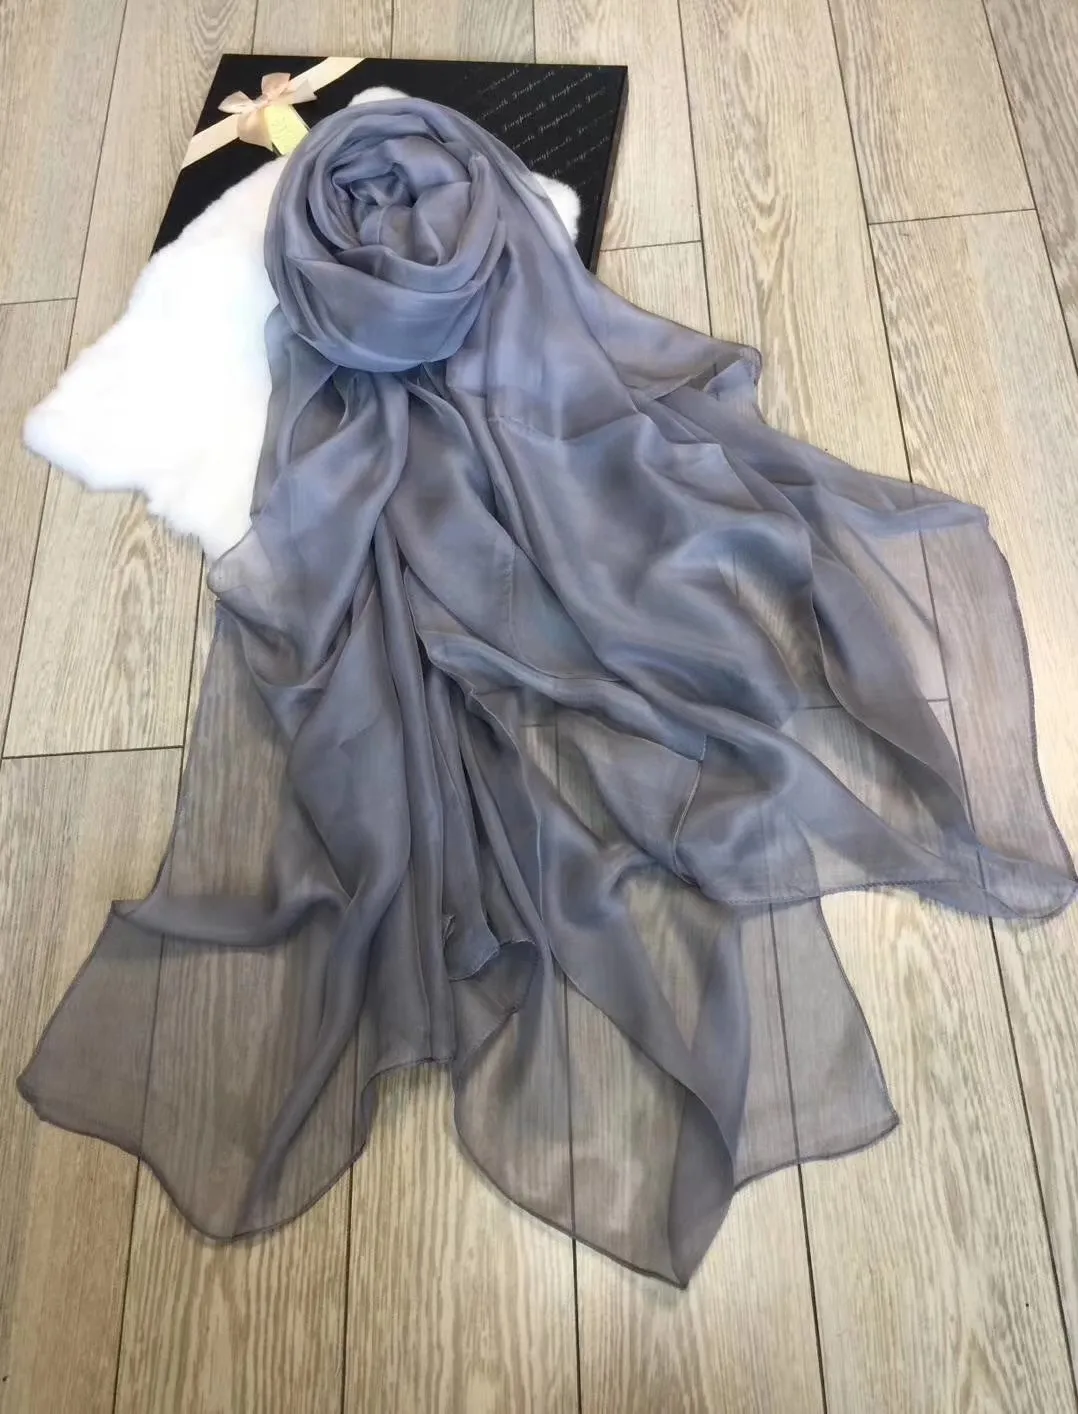 New girl women solid chiffon Silk large Scarf Scarves shawl wrap gift accessory 200*150cm #4076